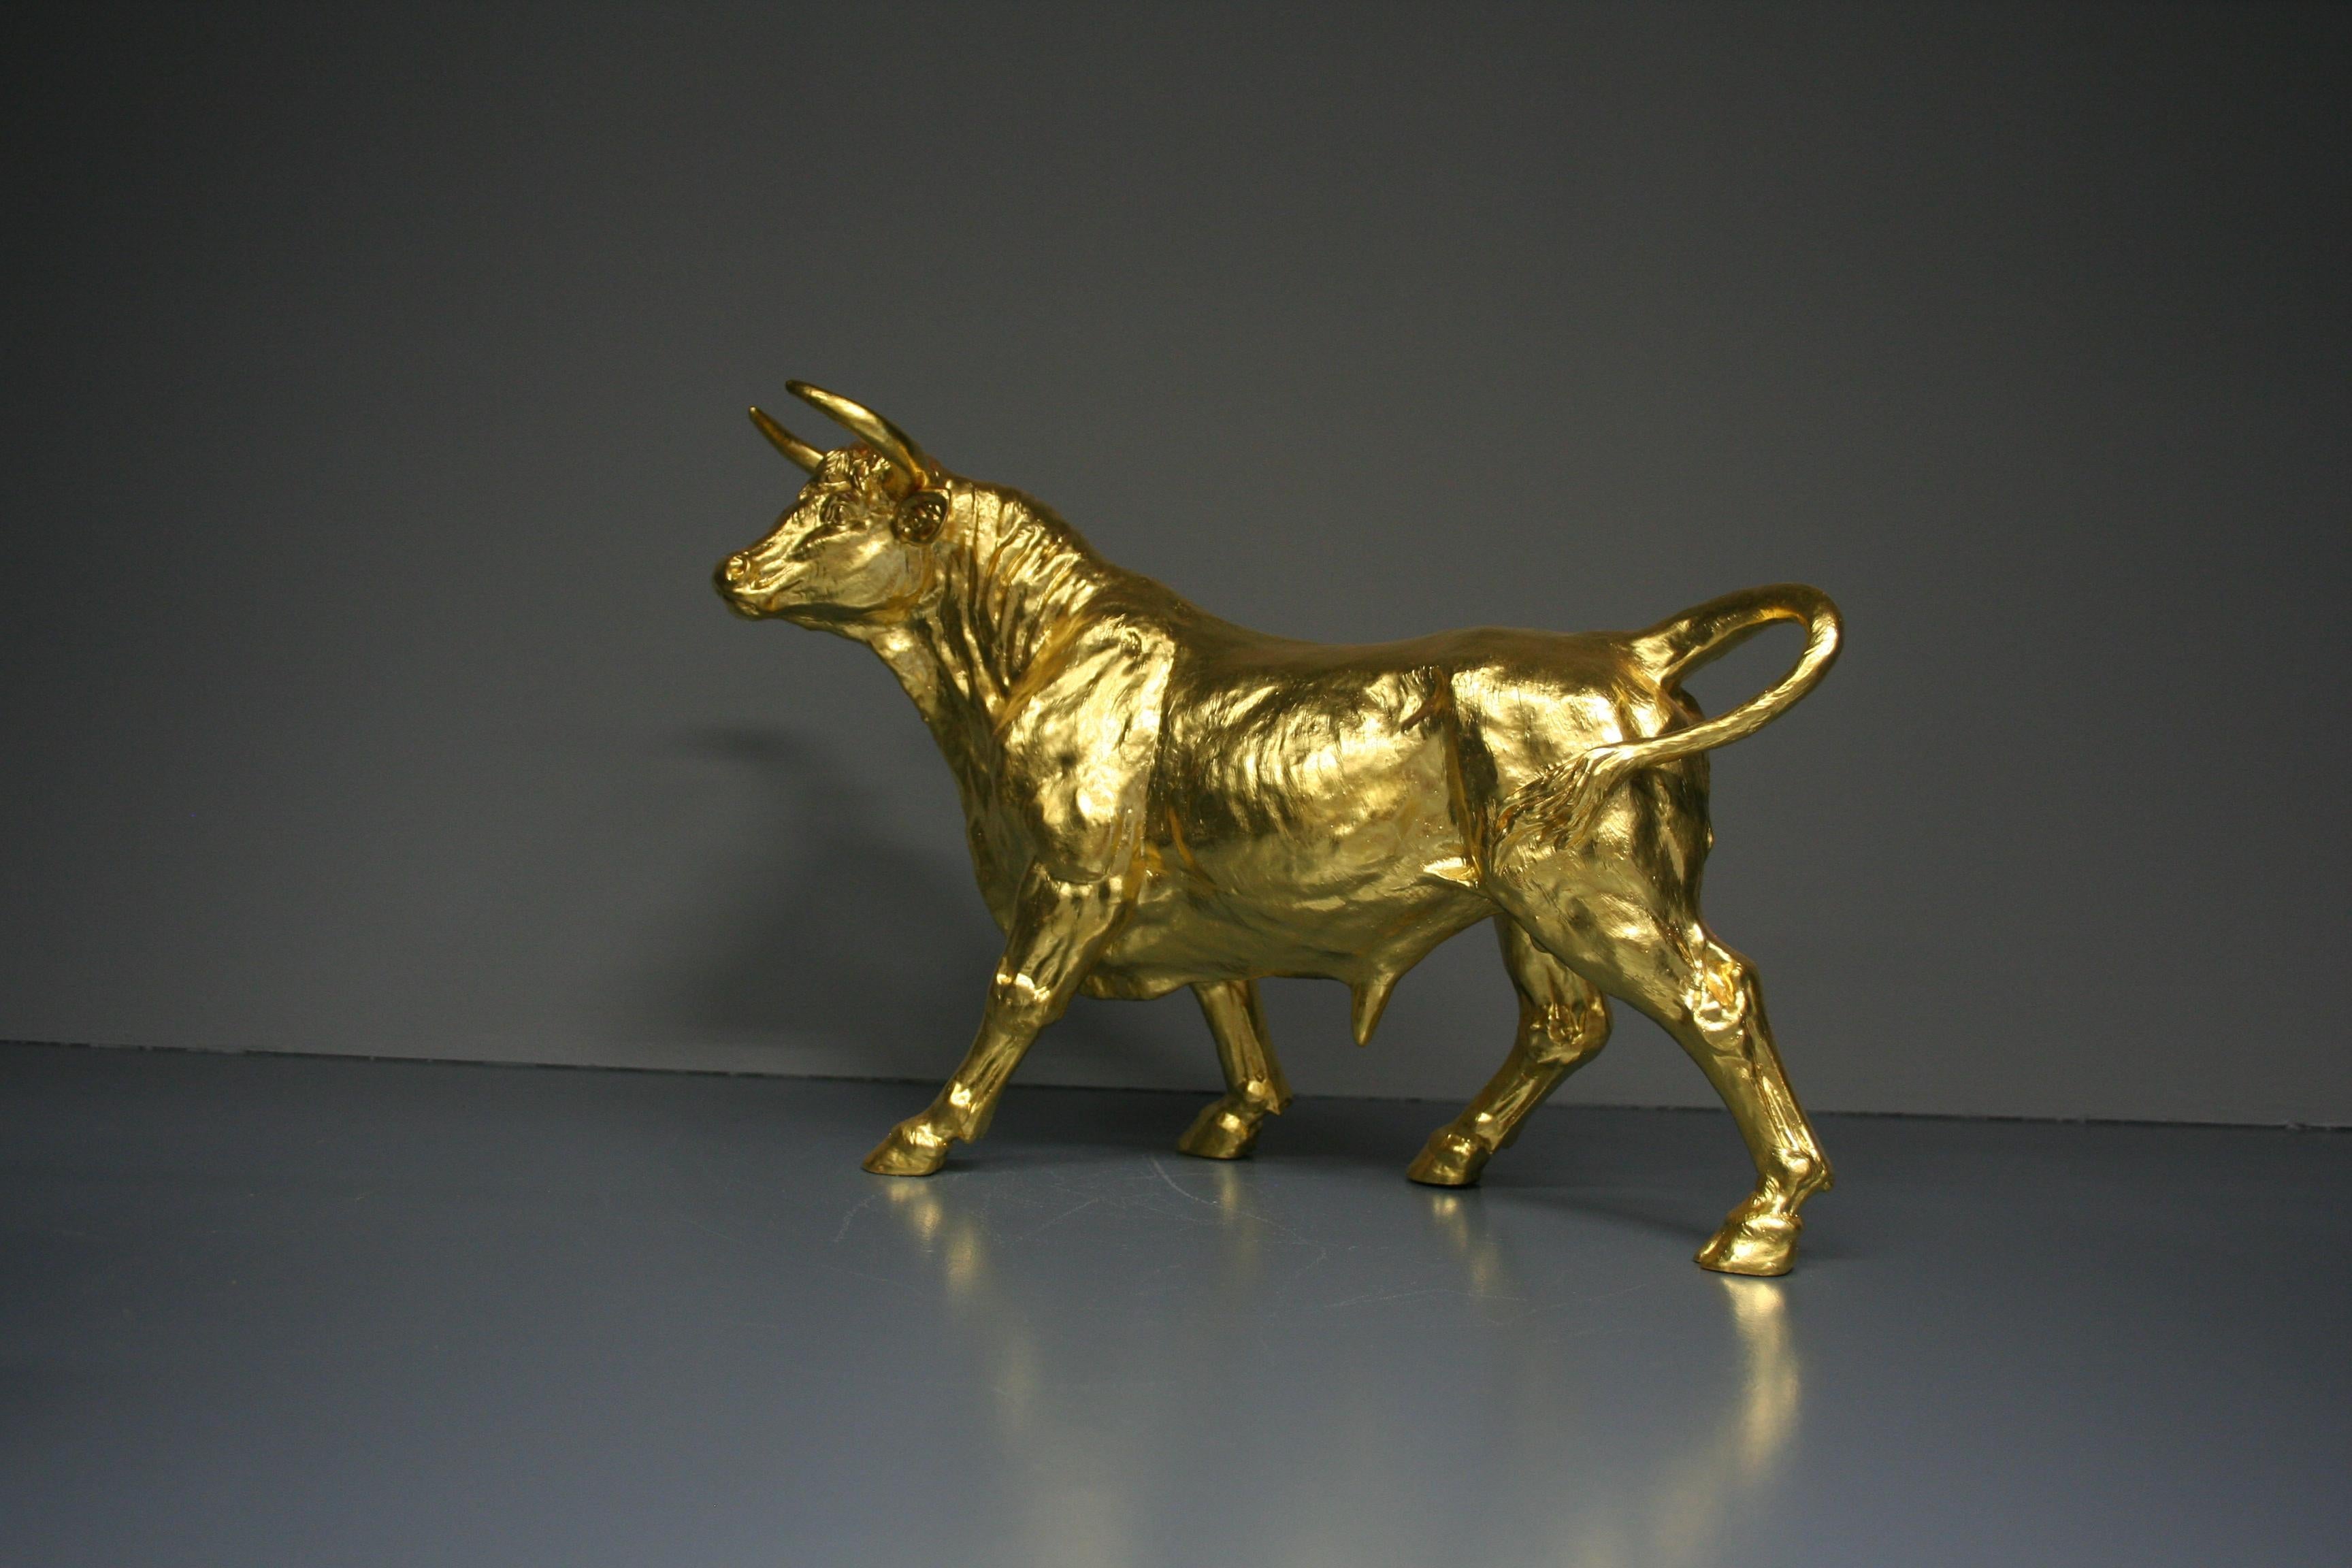 Steven Figurative Sculpture – Goldener Stier 24 Karat vergoldet